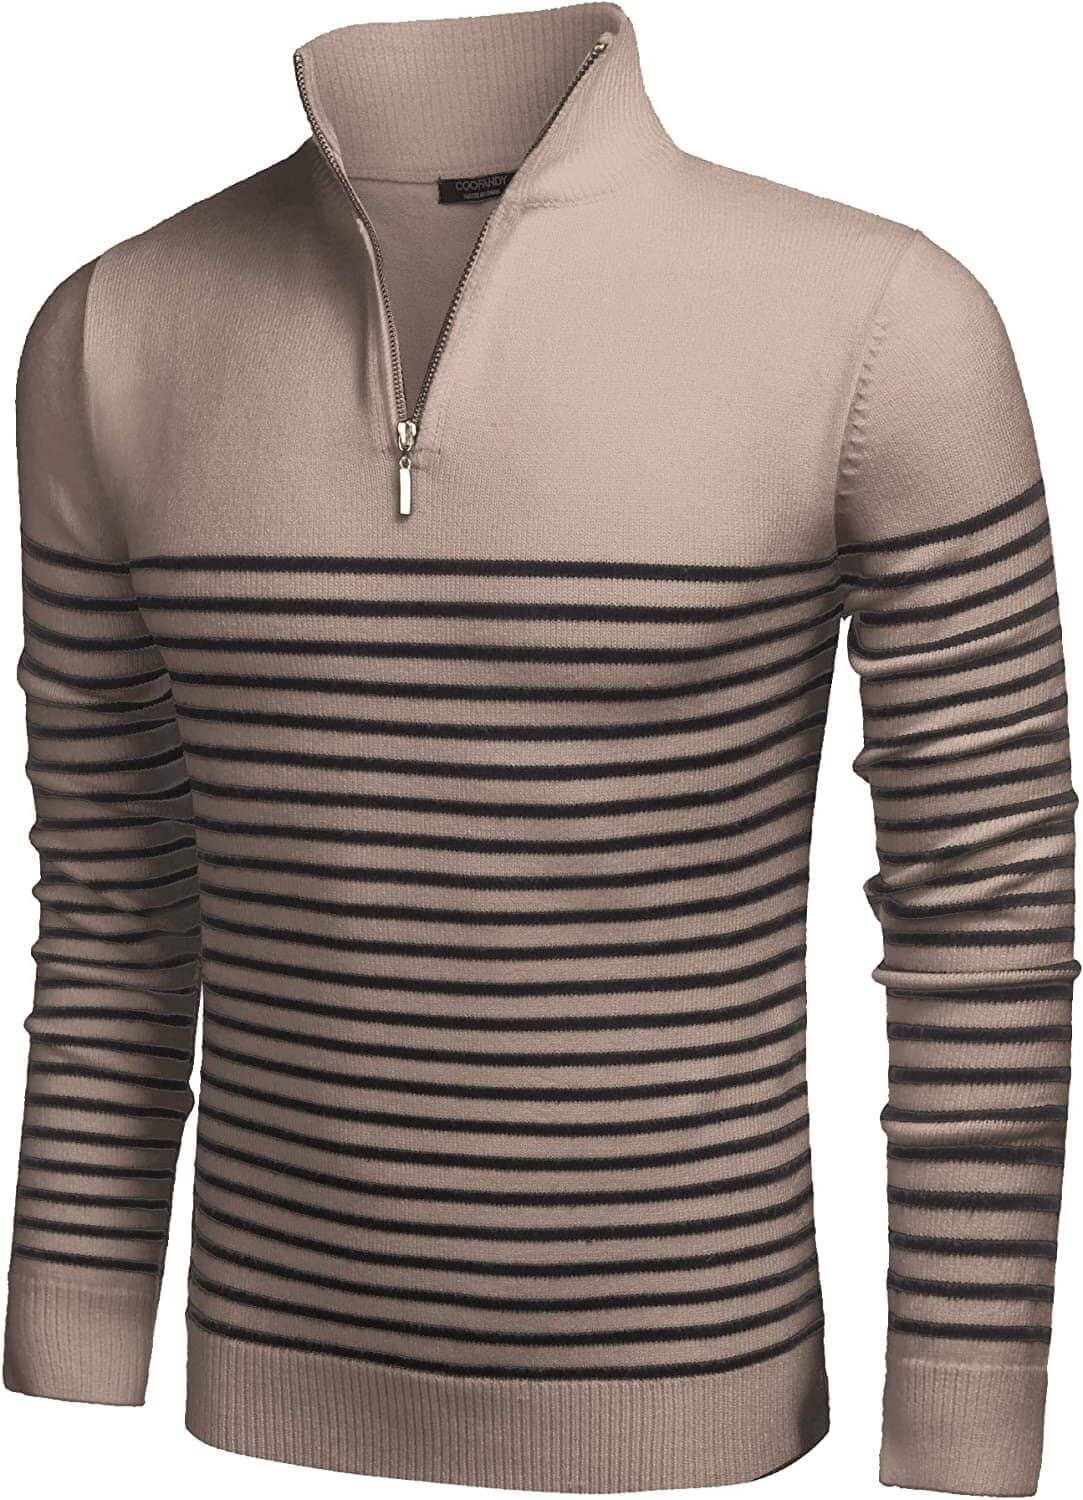 Coofandy Striped Zip Up Mock Neck Pullover Sweaters (US Only) Fashion Hoodies & Sweatshirts Simbama Khaki S 